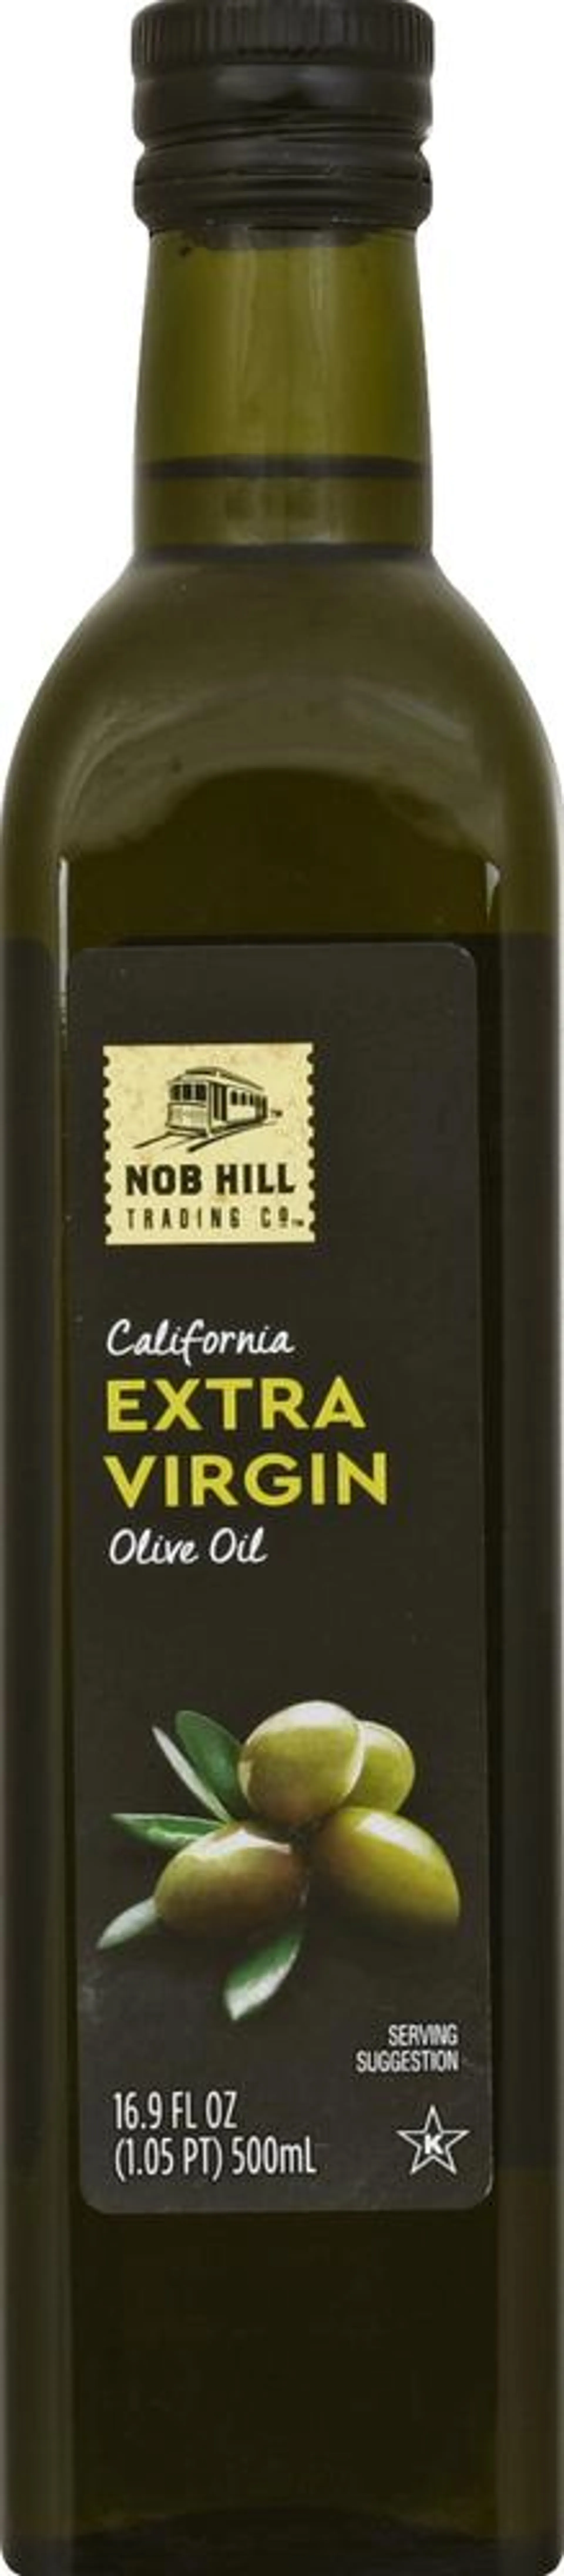 Nob Hill Trading Co. Extra Virgin California Olive Oil